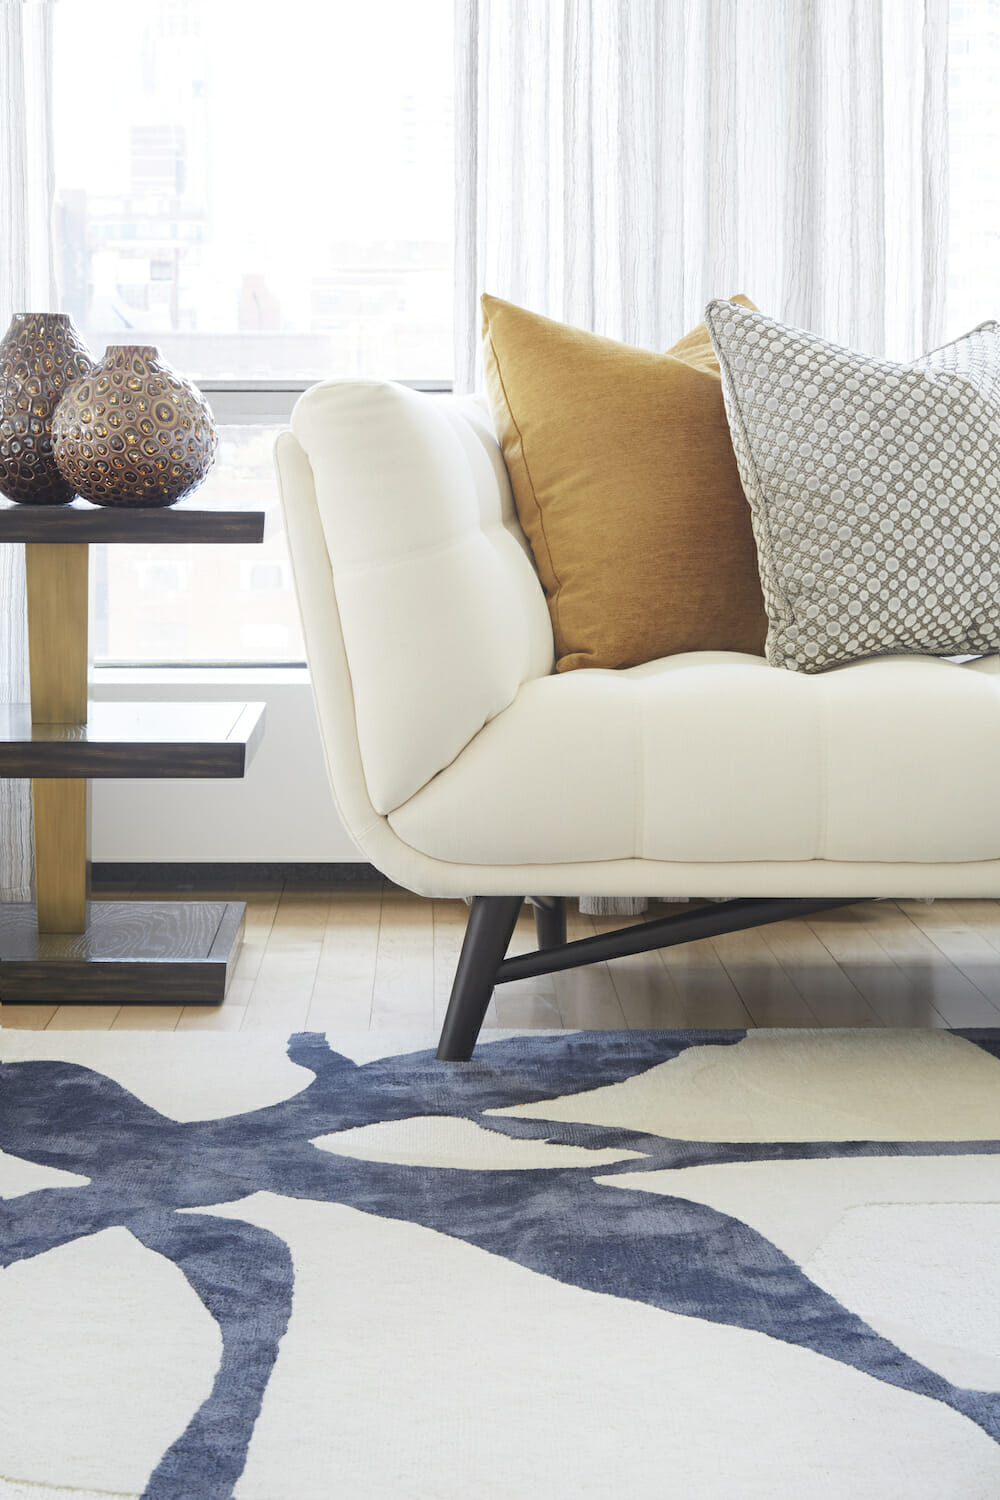 Manhattan renovation, Murray Hill, home, design, living room, couch, rug